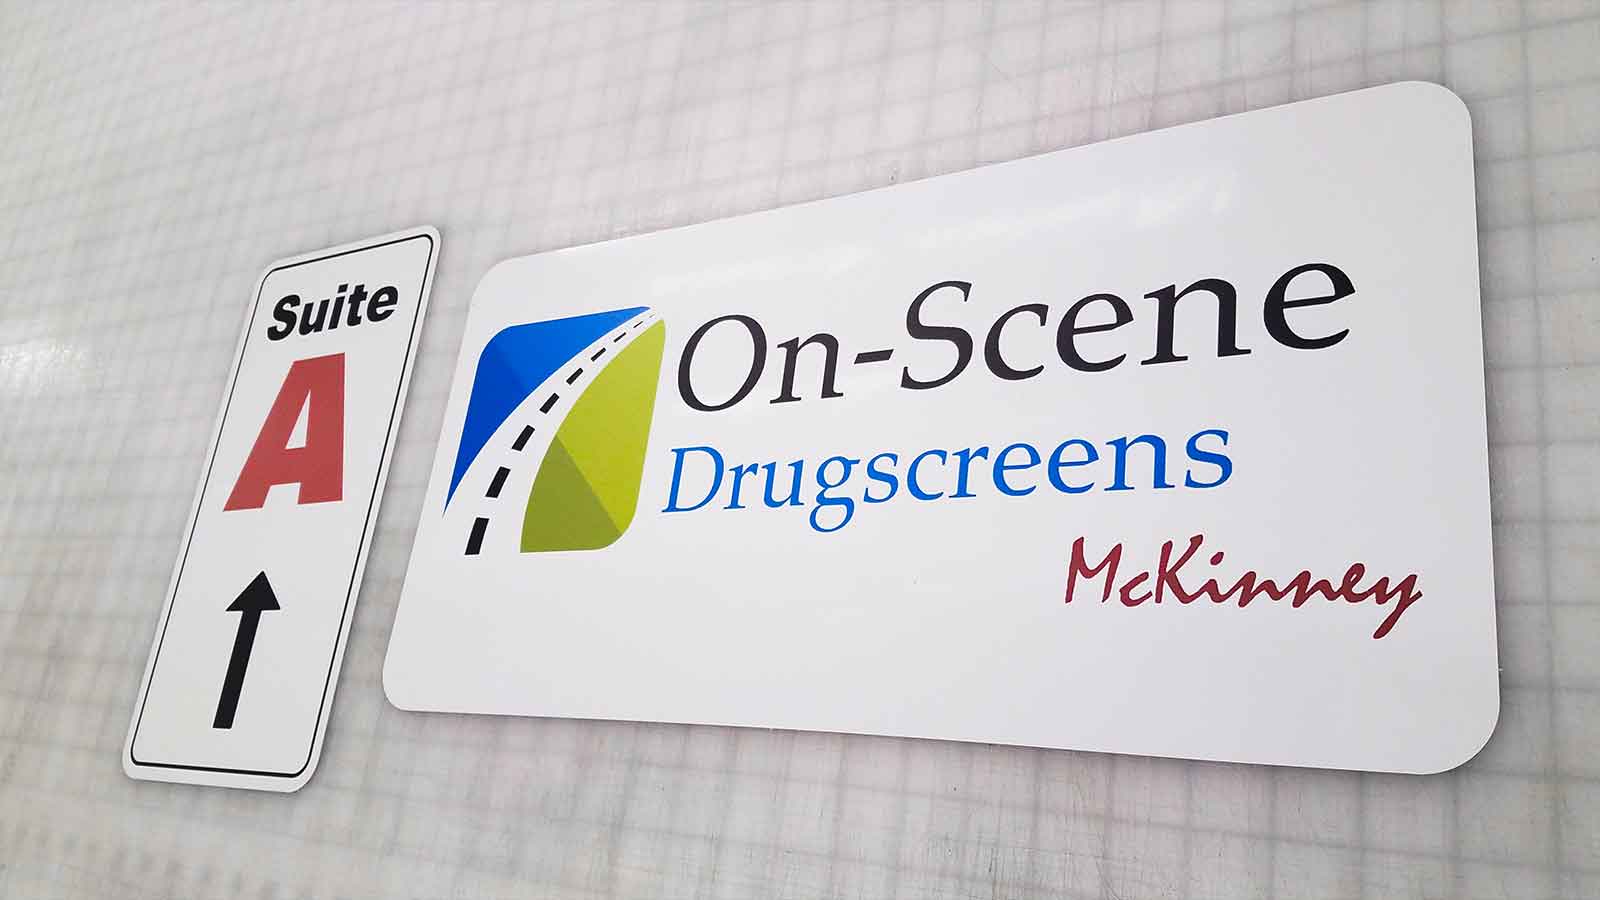 On-scene Drugscreens Custom printed aluminum tray sign